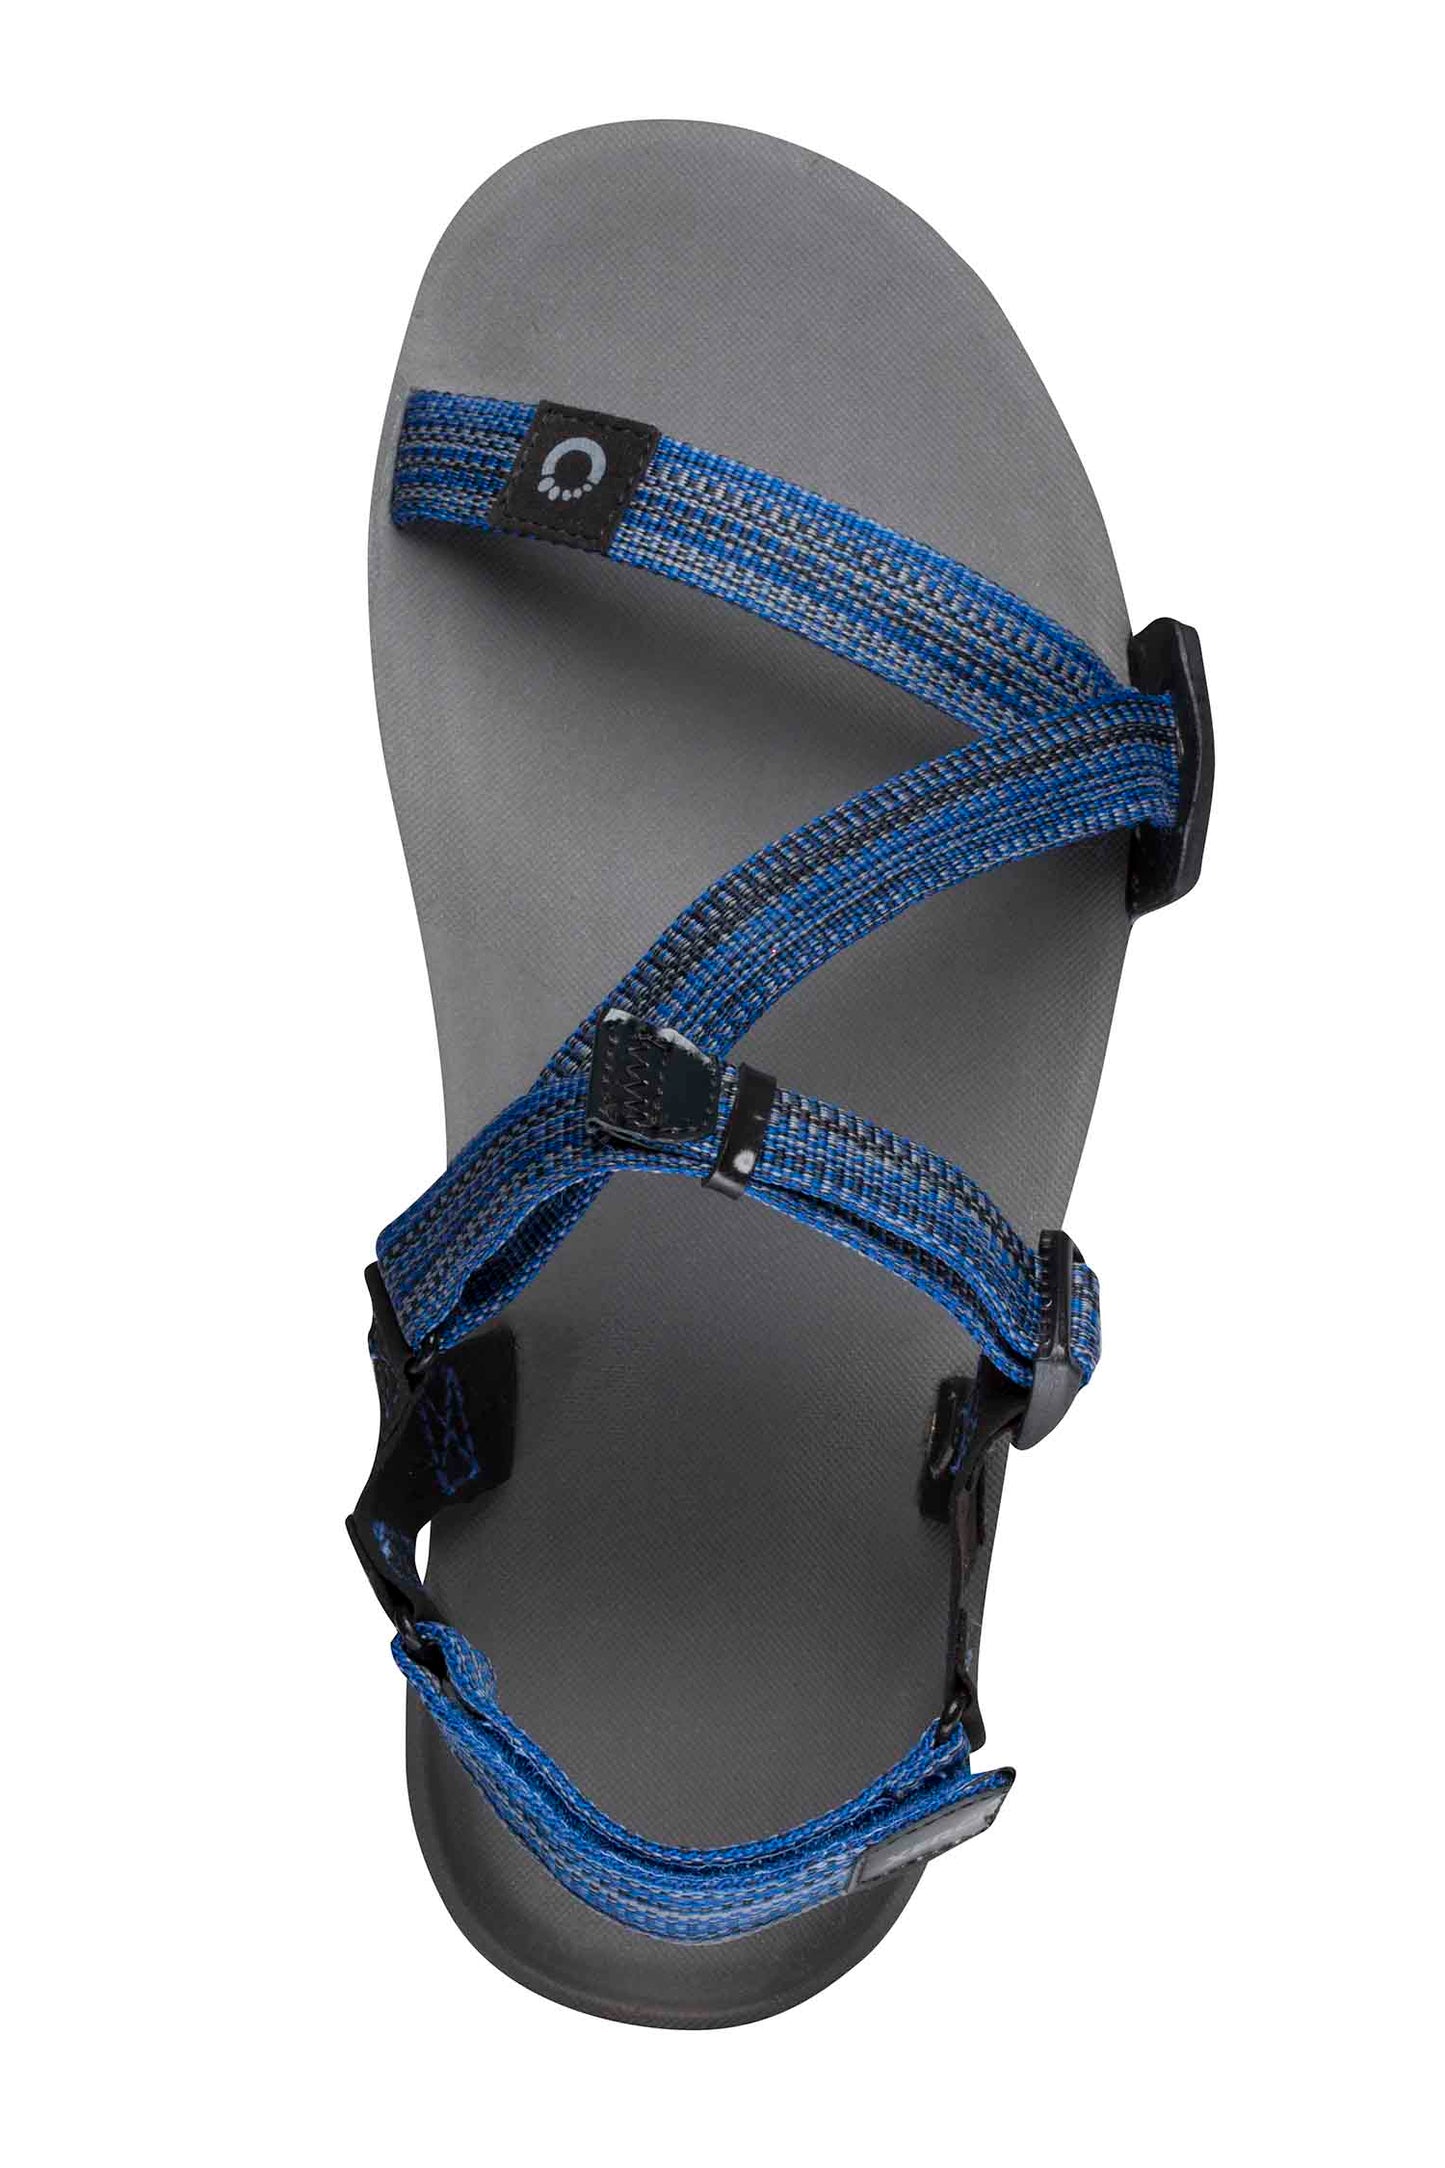 Xero - Sandals Z-Trail - Multi-Blue - Men's